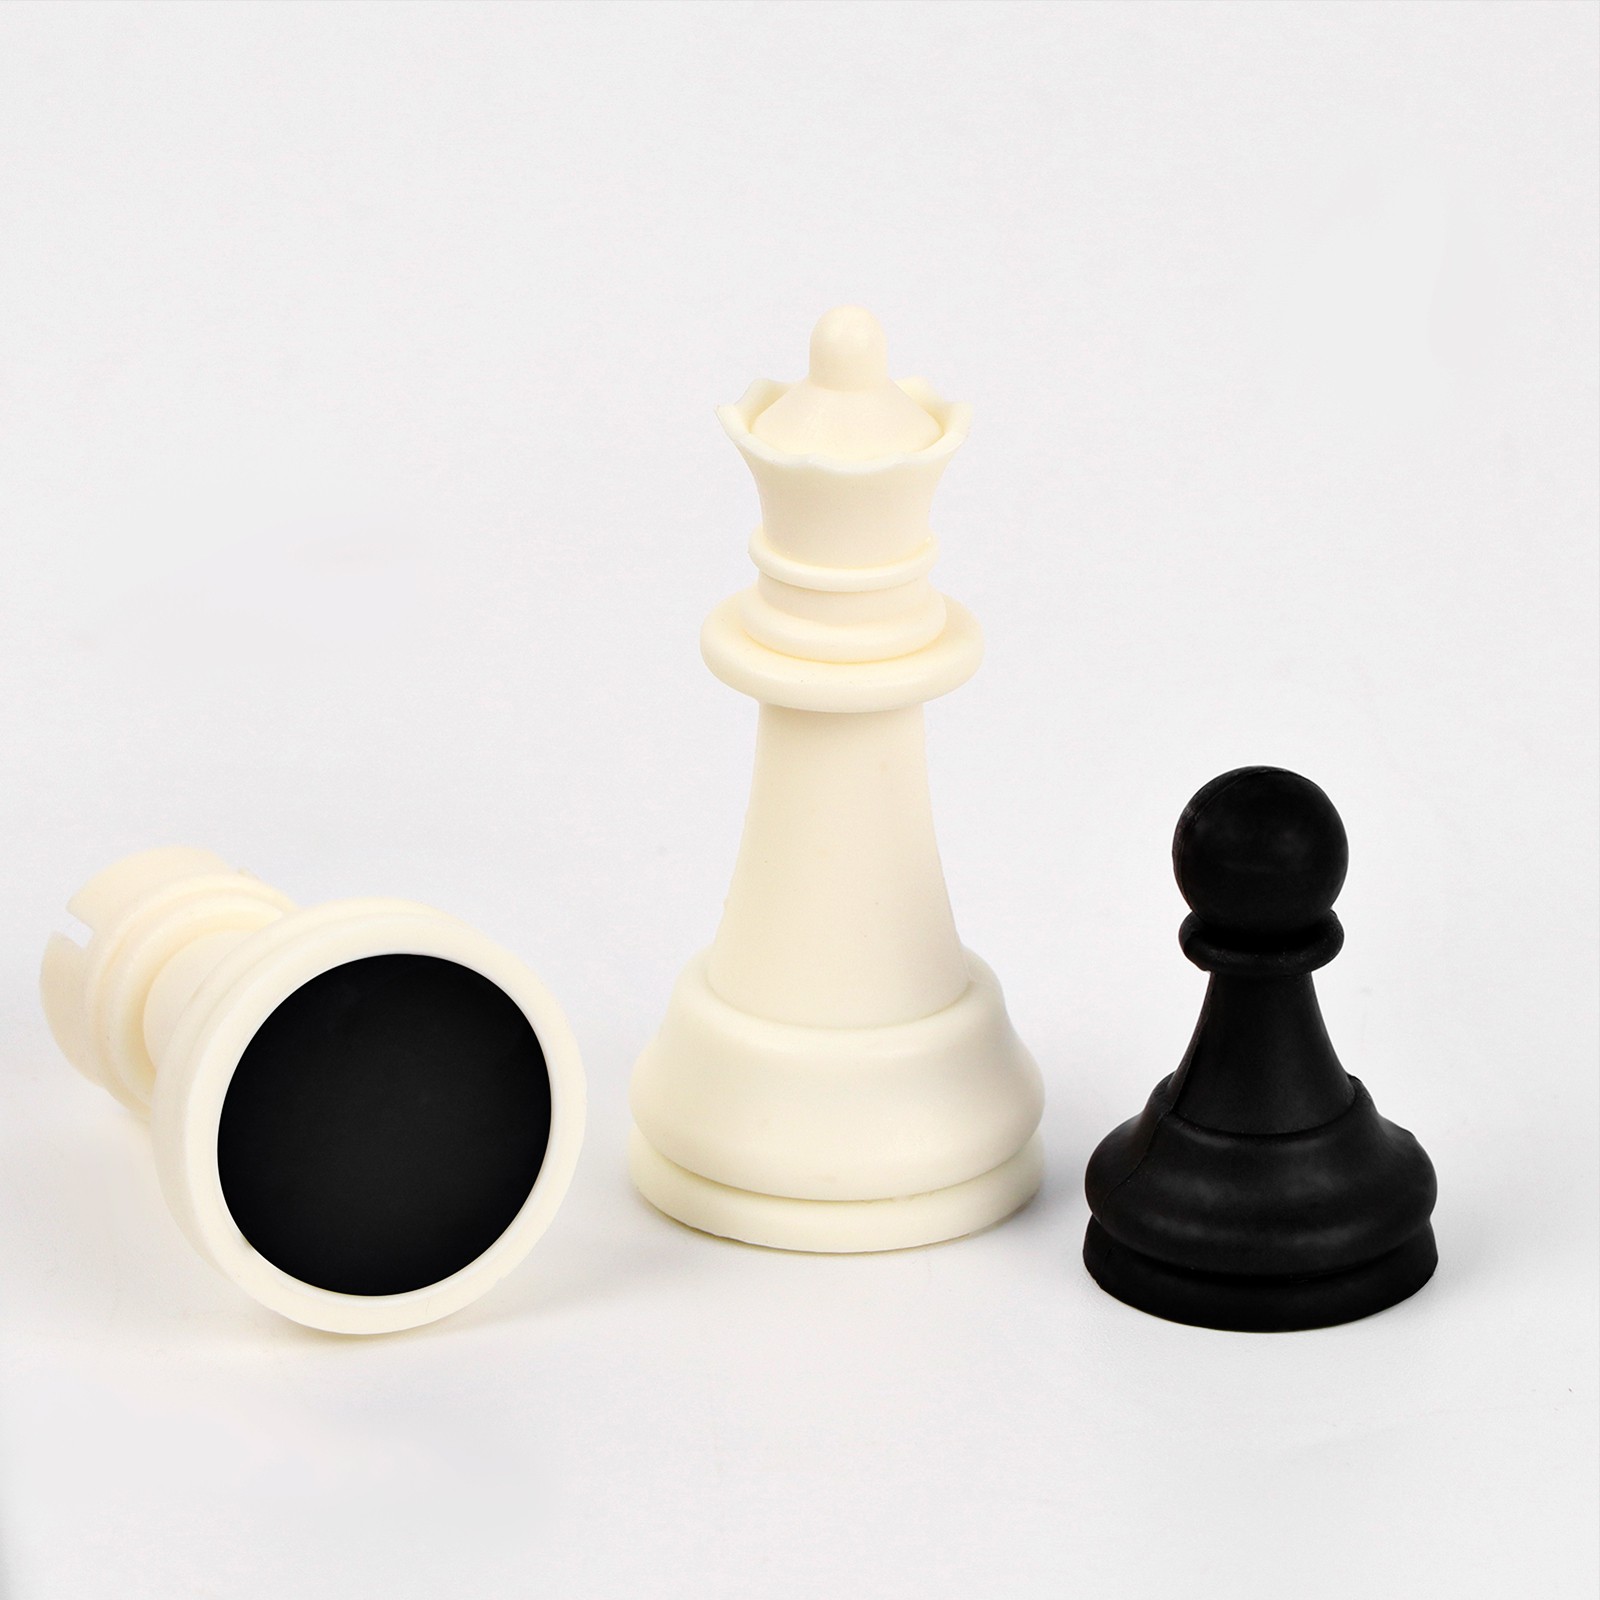 Шахматы Sima-Land обиходные «Панды» король h 6.2 см пешка h 3.2 см доска 29х29 см - фото 2